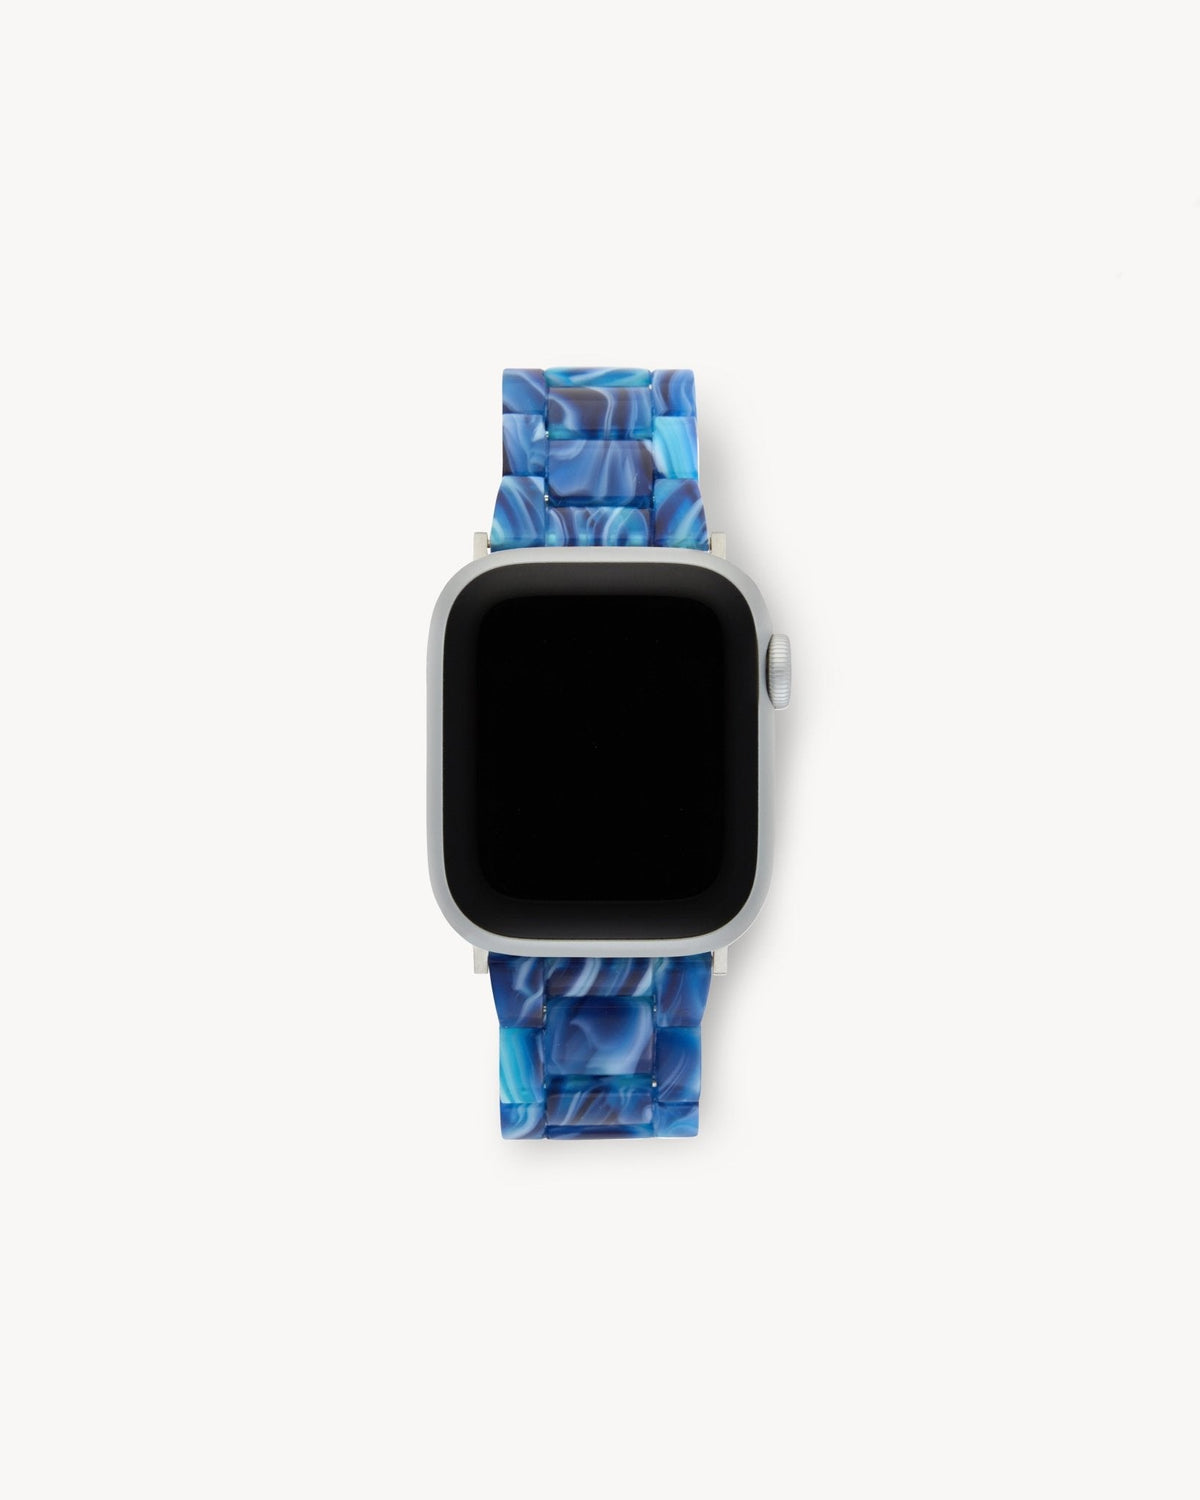 Apple Watch Band in Capri OUTLET - MACHETE